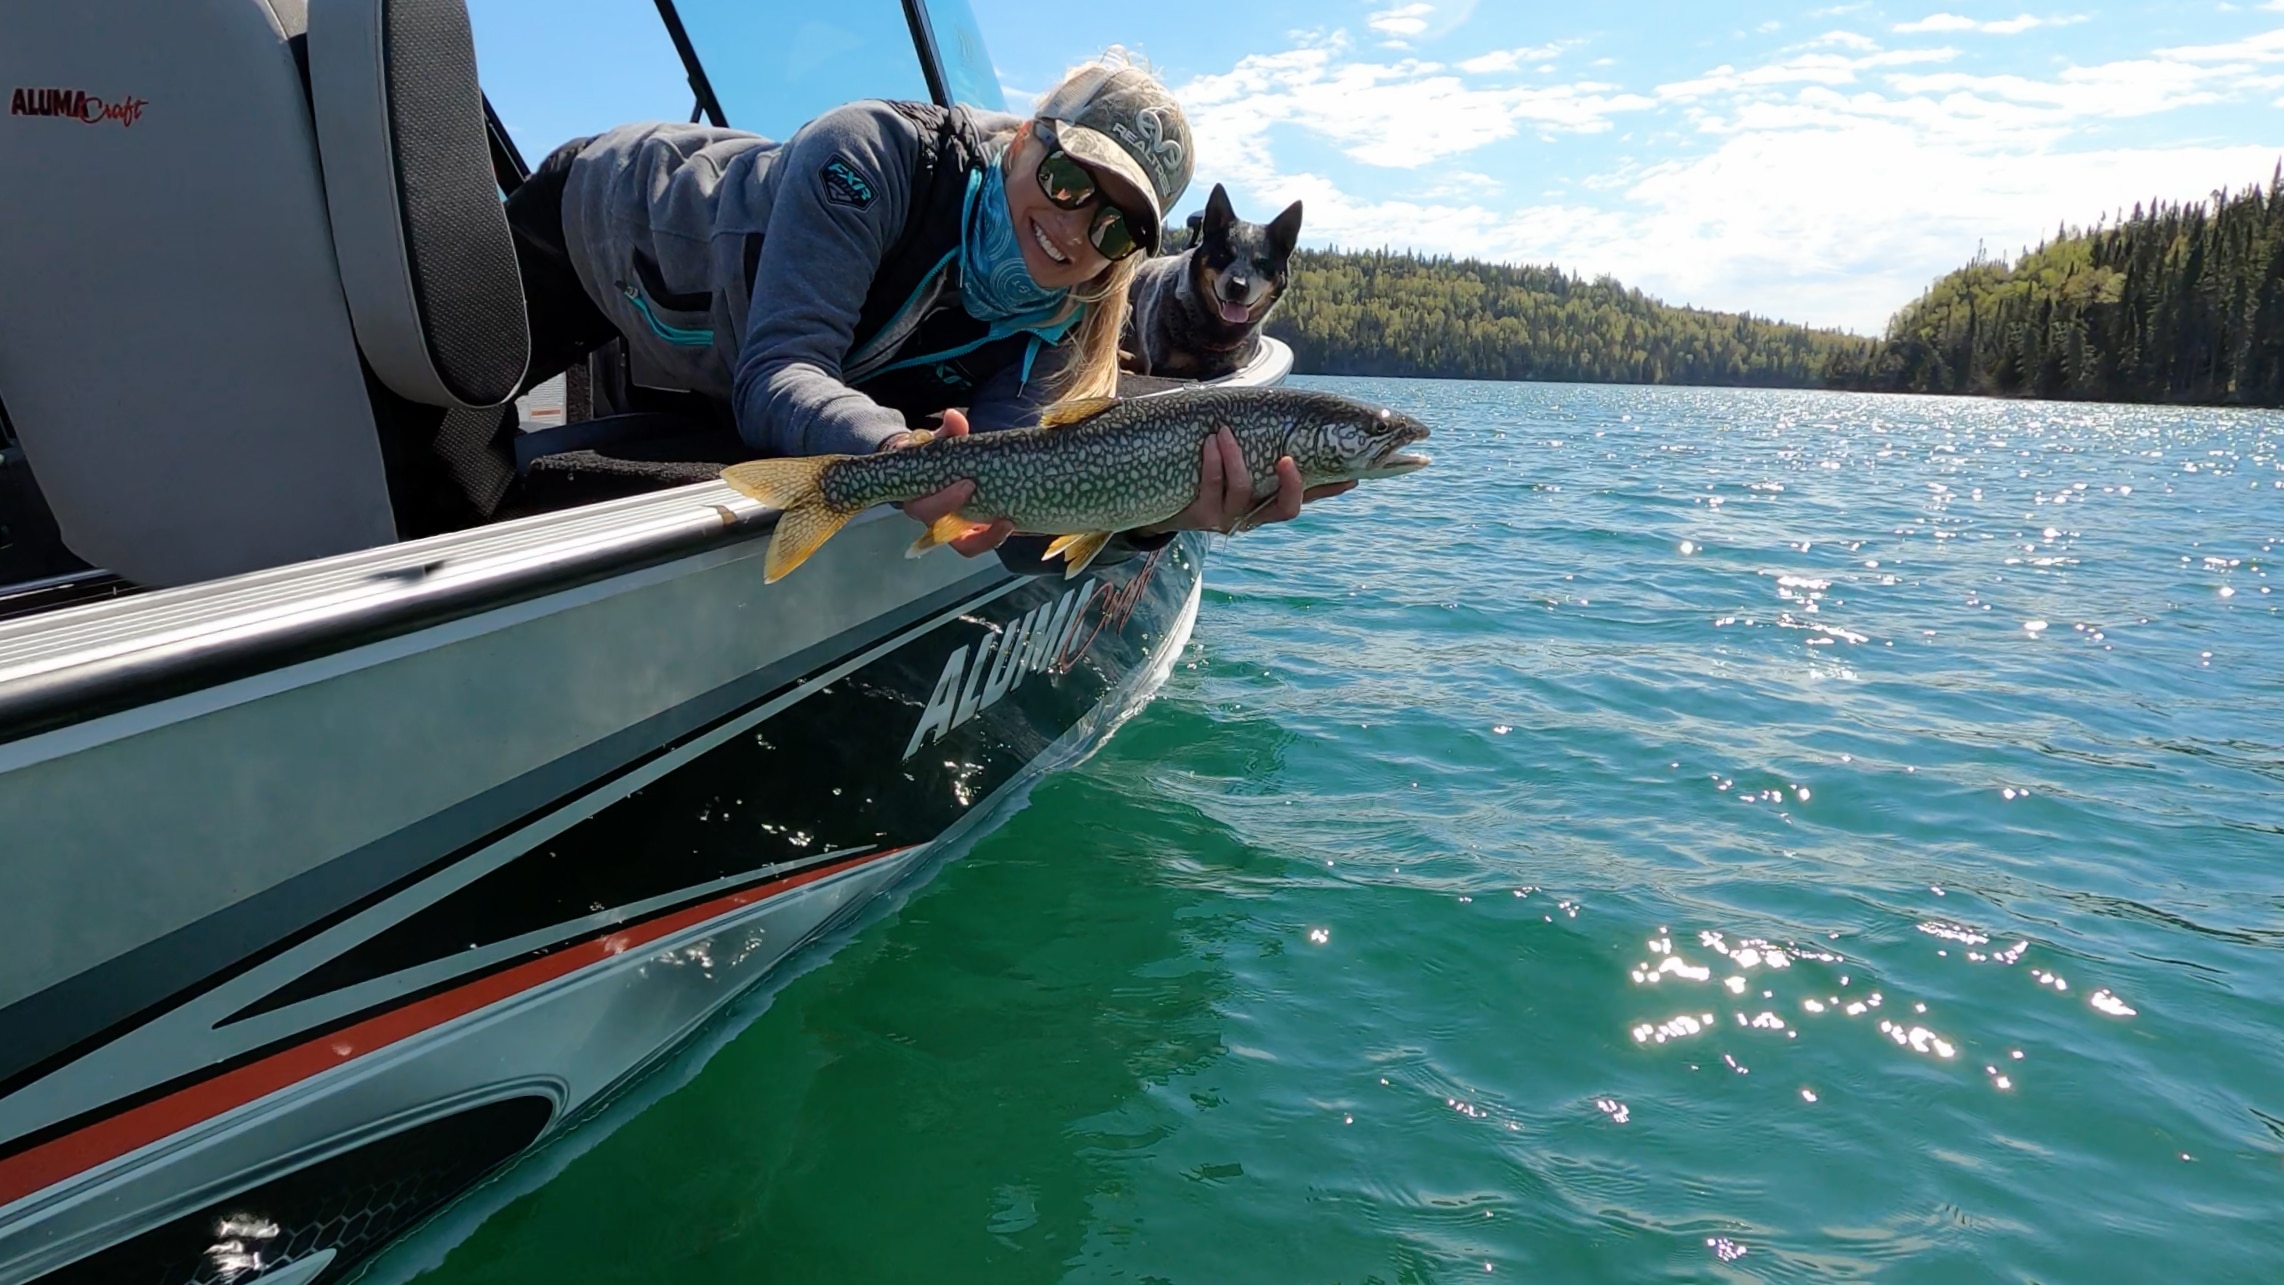 Rebekka Redd trout fishing from her Alumacraft aluminum boat